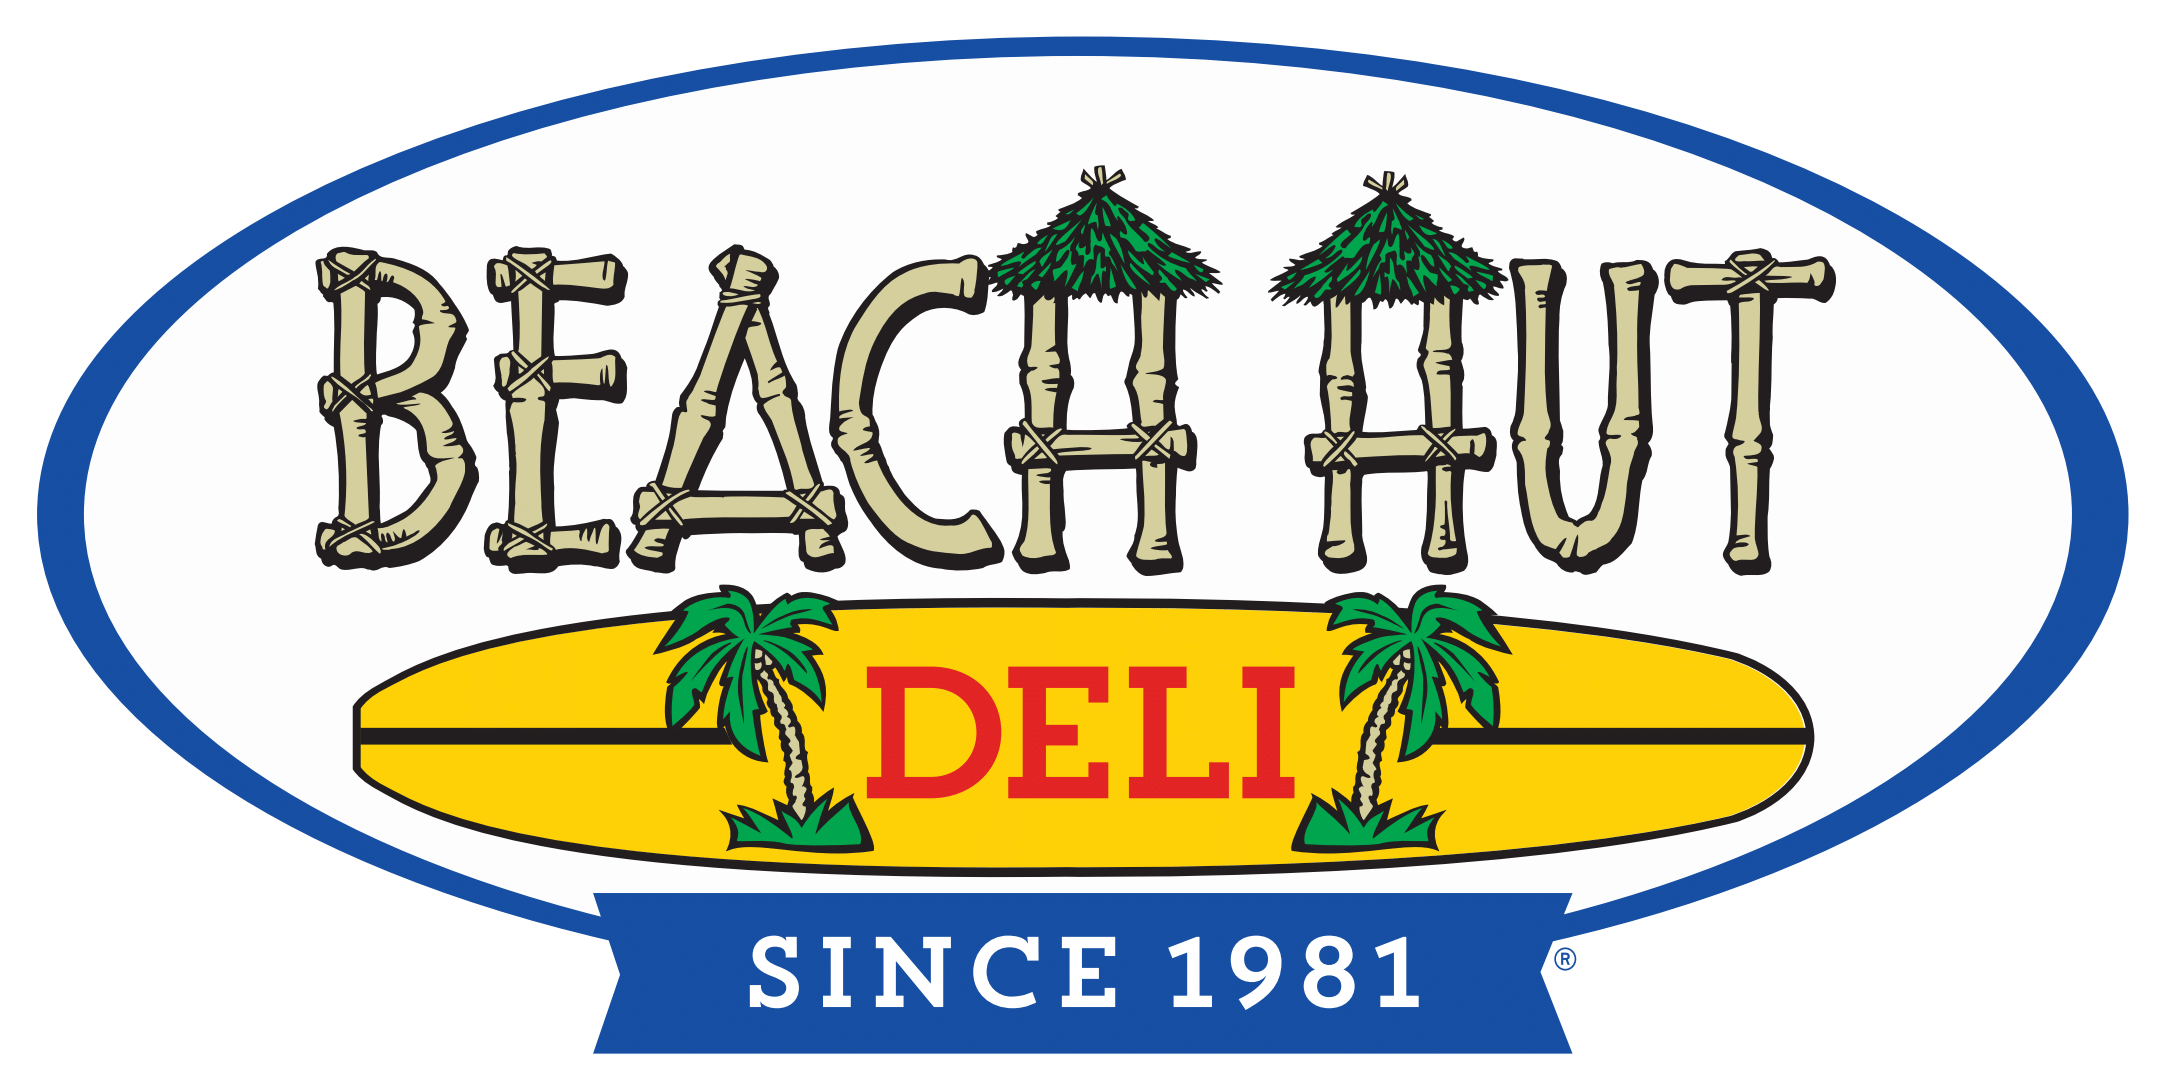 BEACH HUT DELI Logo.png